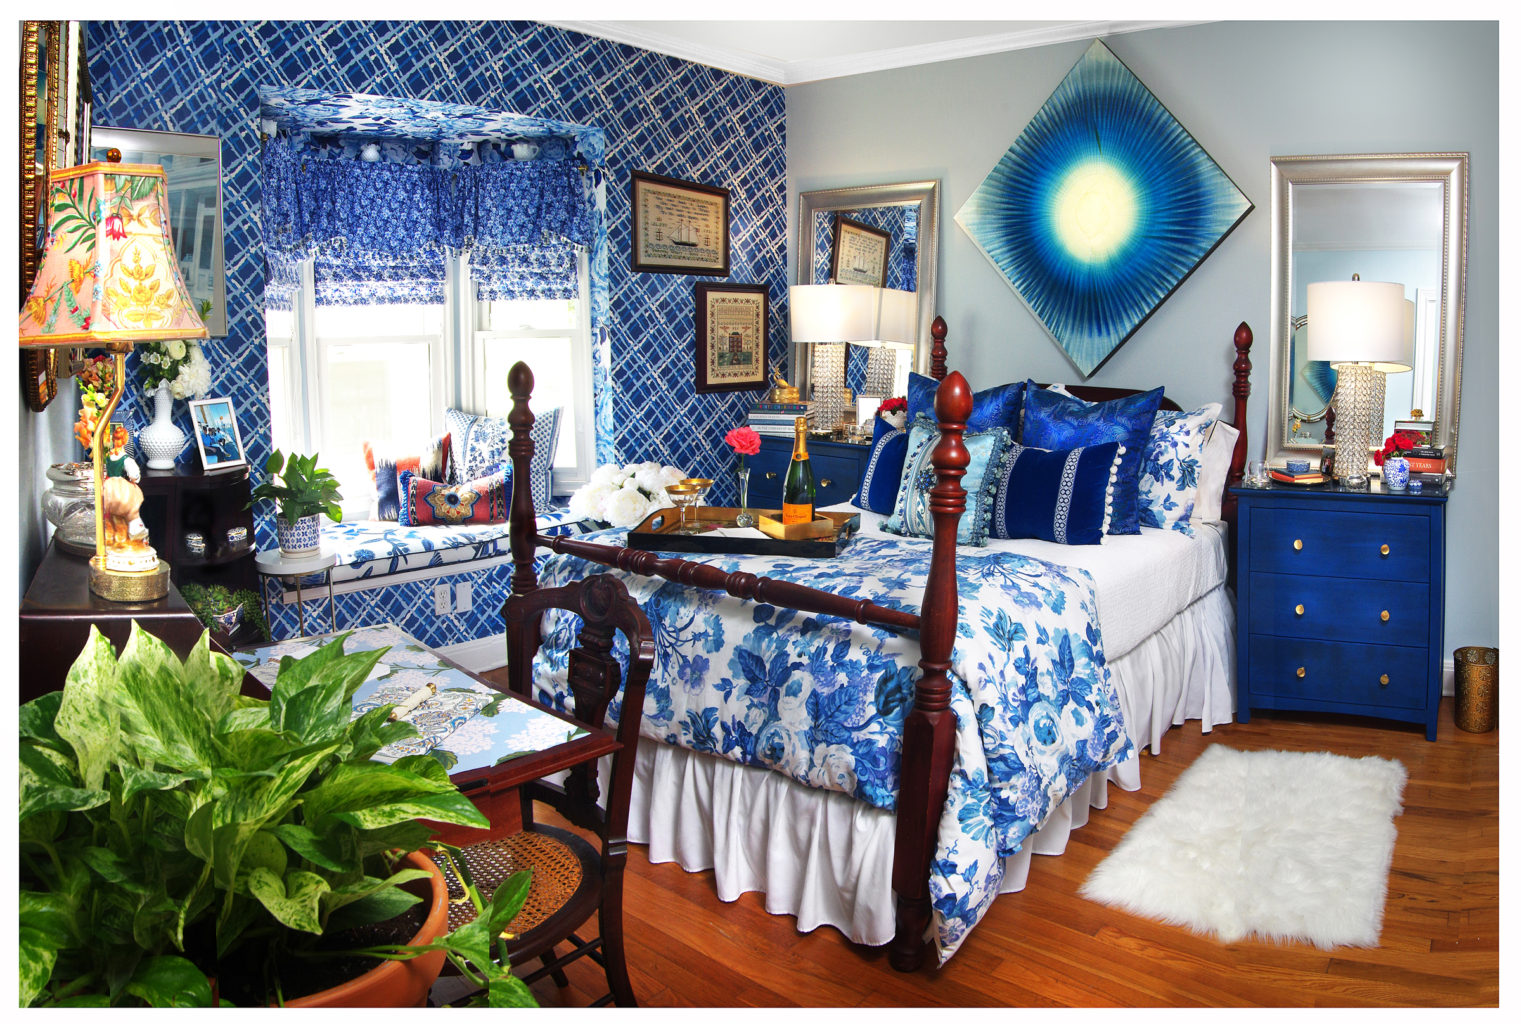 BOLD Blue & White Bedroom for the spring 2019 One Room Challenge - Details on The Pillow Goddess blog! 